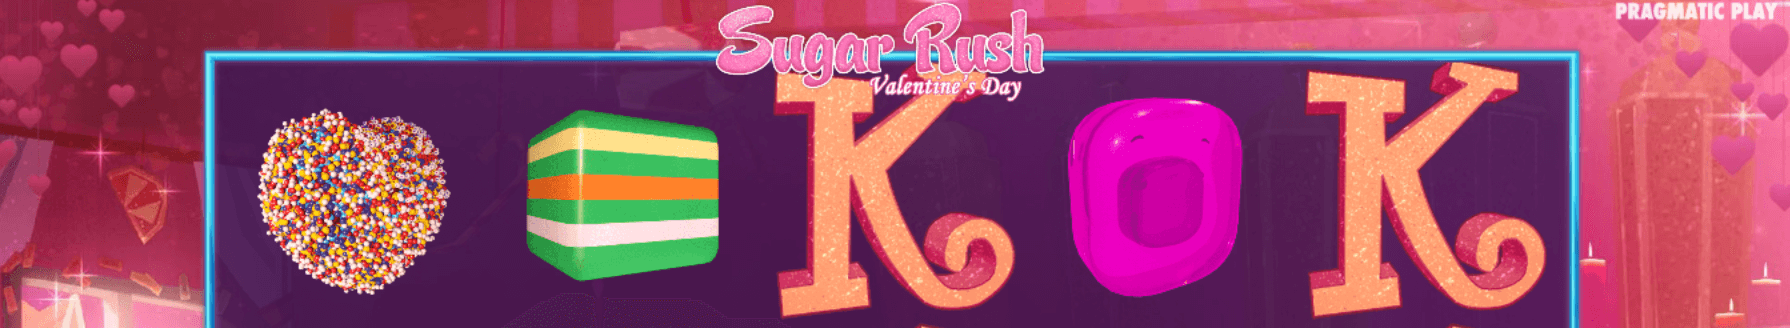 tragaperras Sugar Rush san valentin